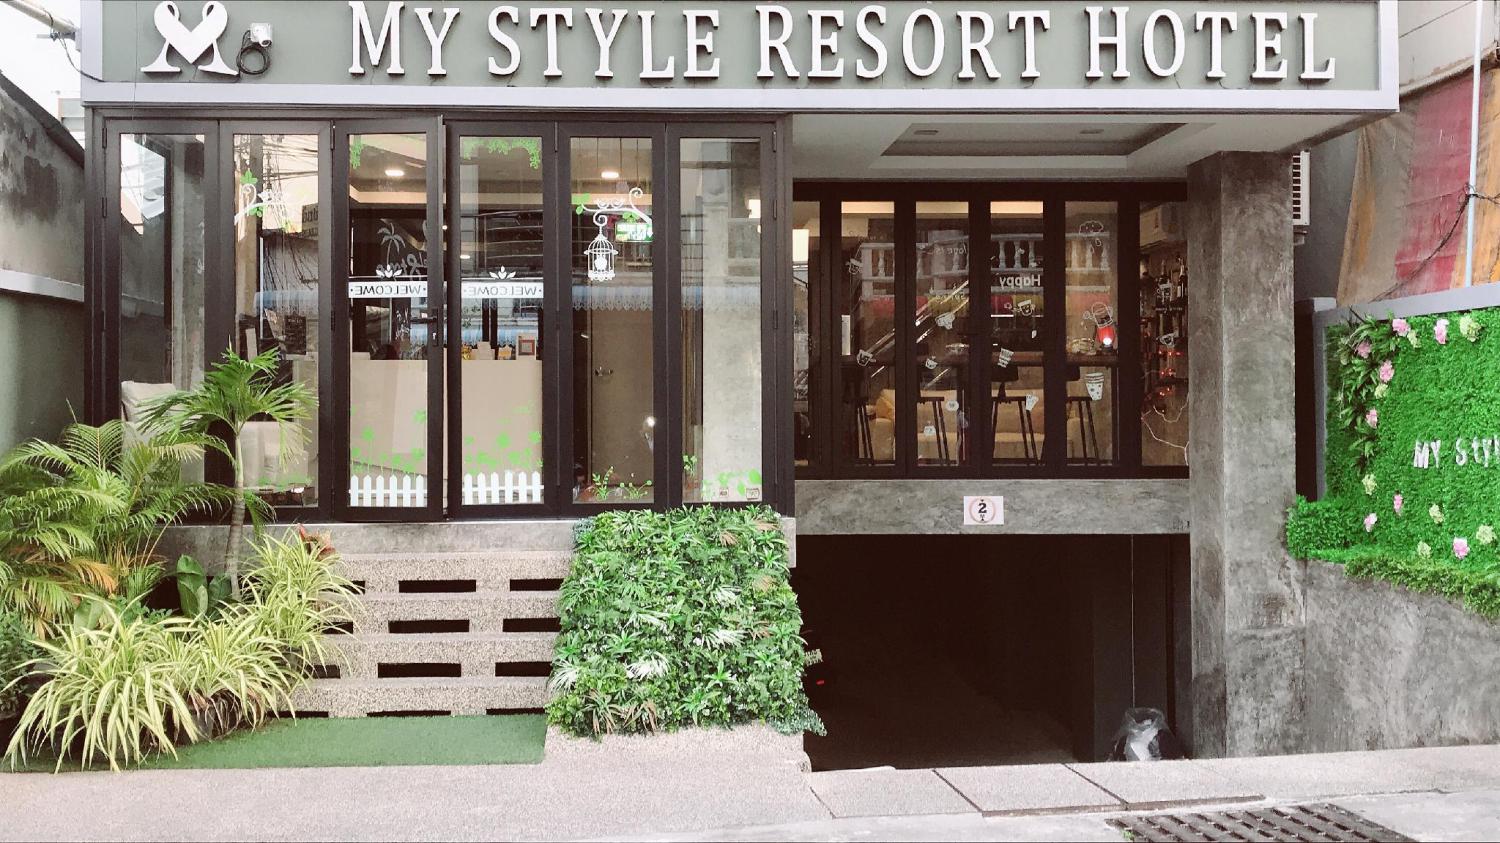 My Style Resort Hotel - Image 5